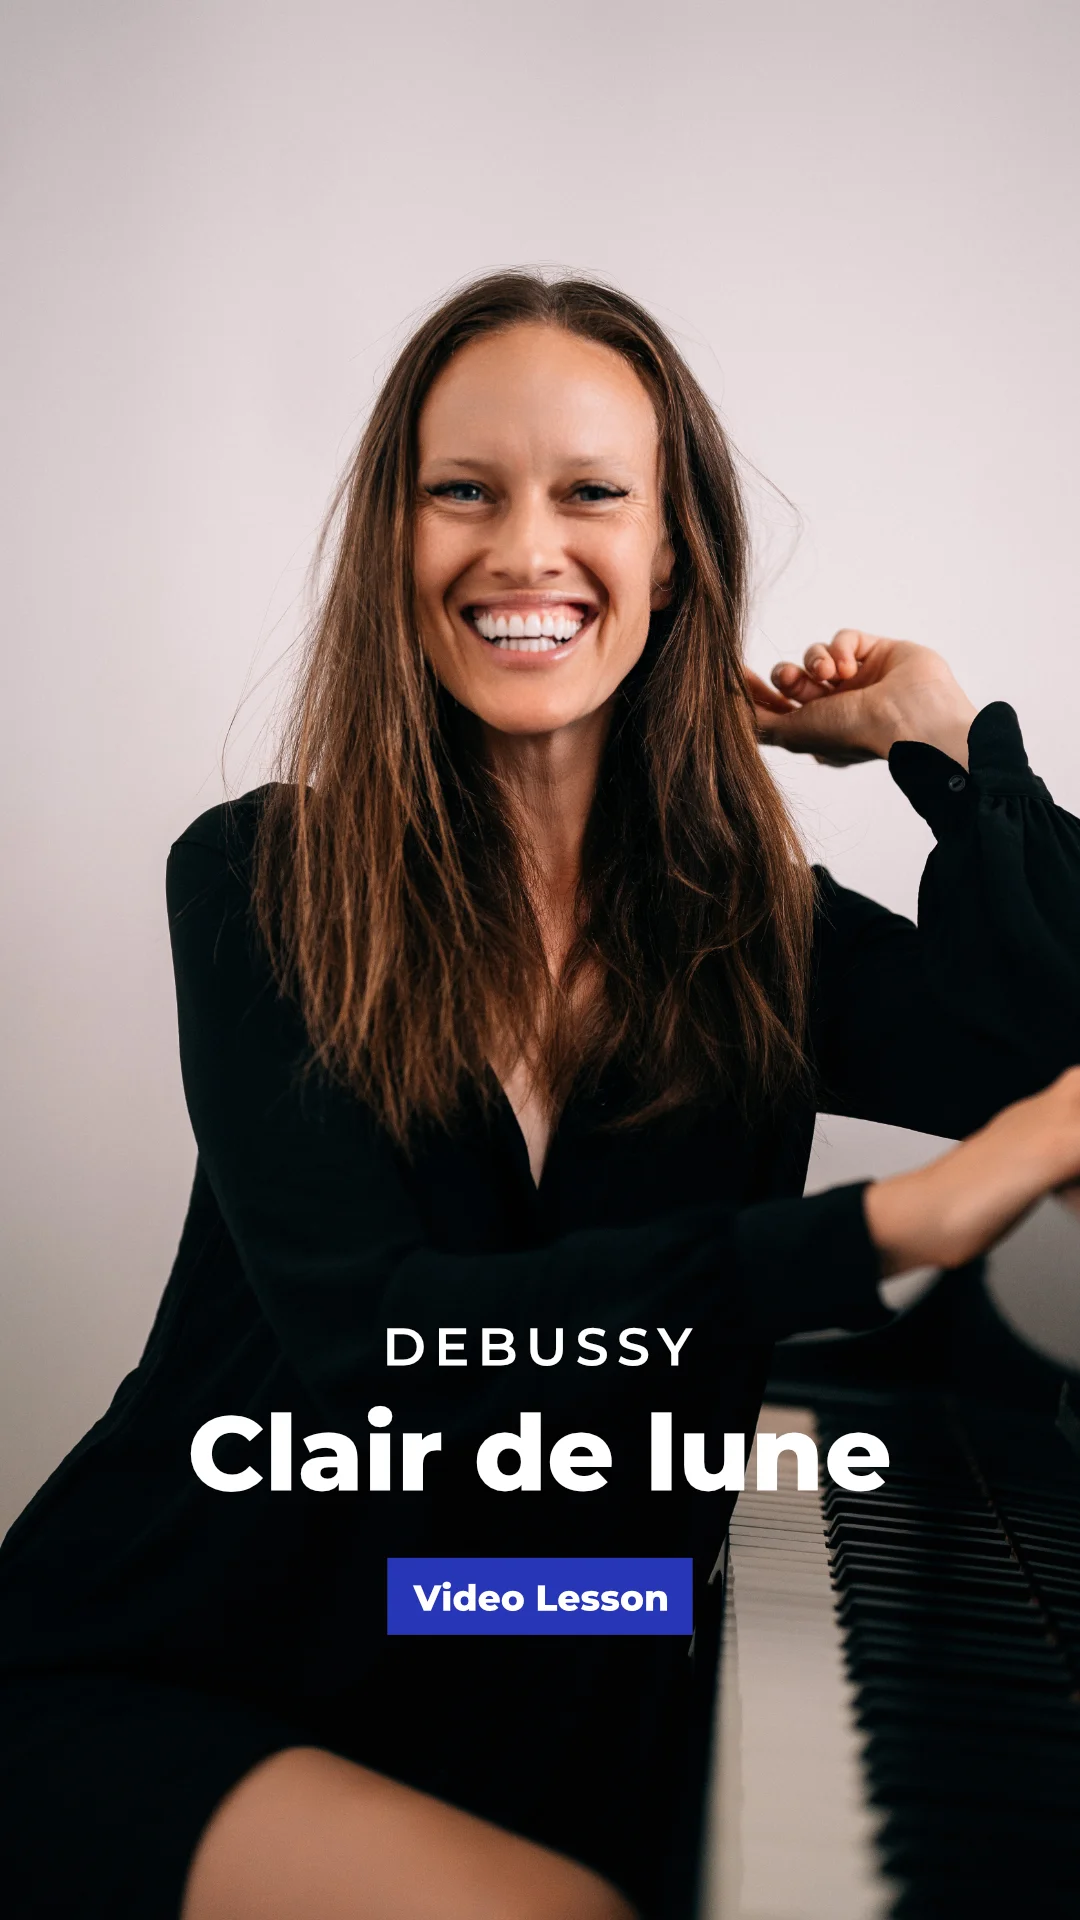 Debussy: Clair de lune – Video Lesson